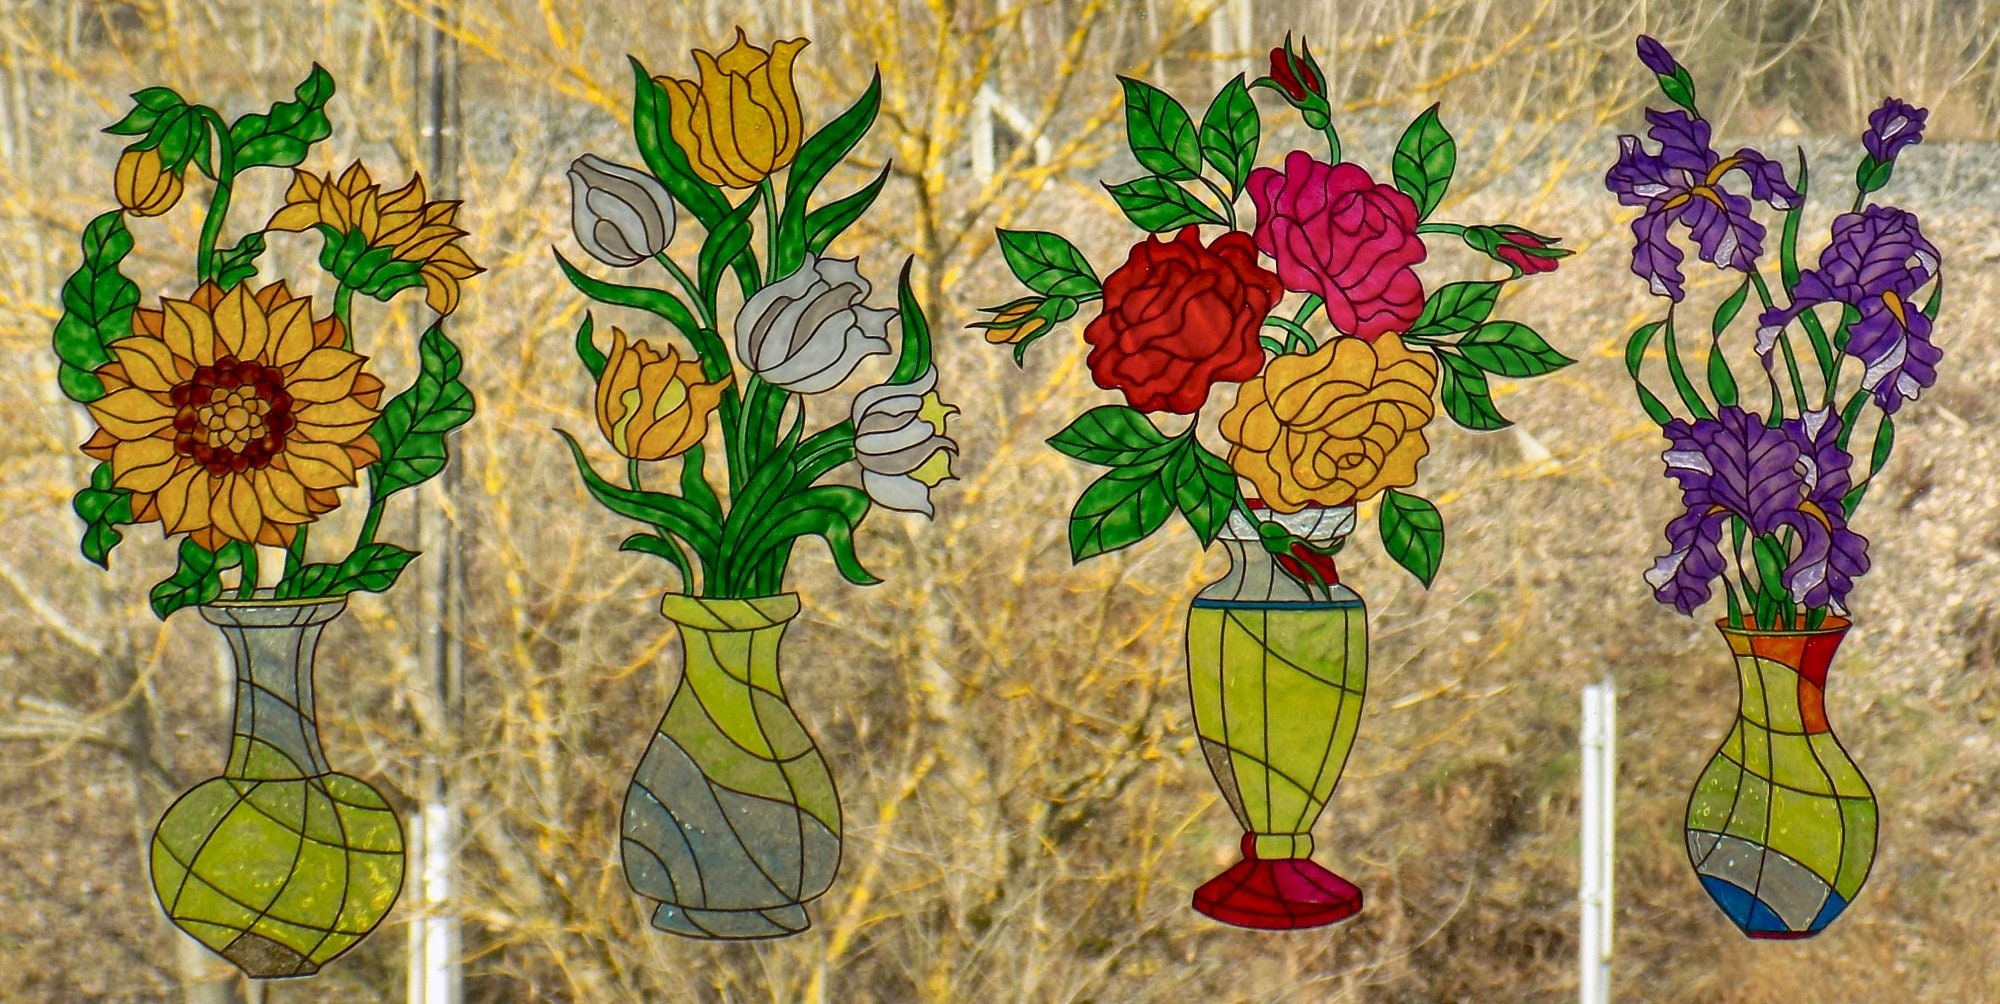 Wicoart Sticker Window Cling Faux Stained Glass 4 Vases de Fleurs 30x20 cm Chaque